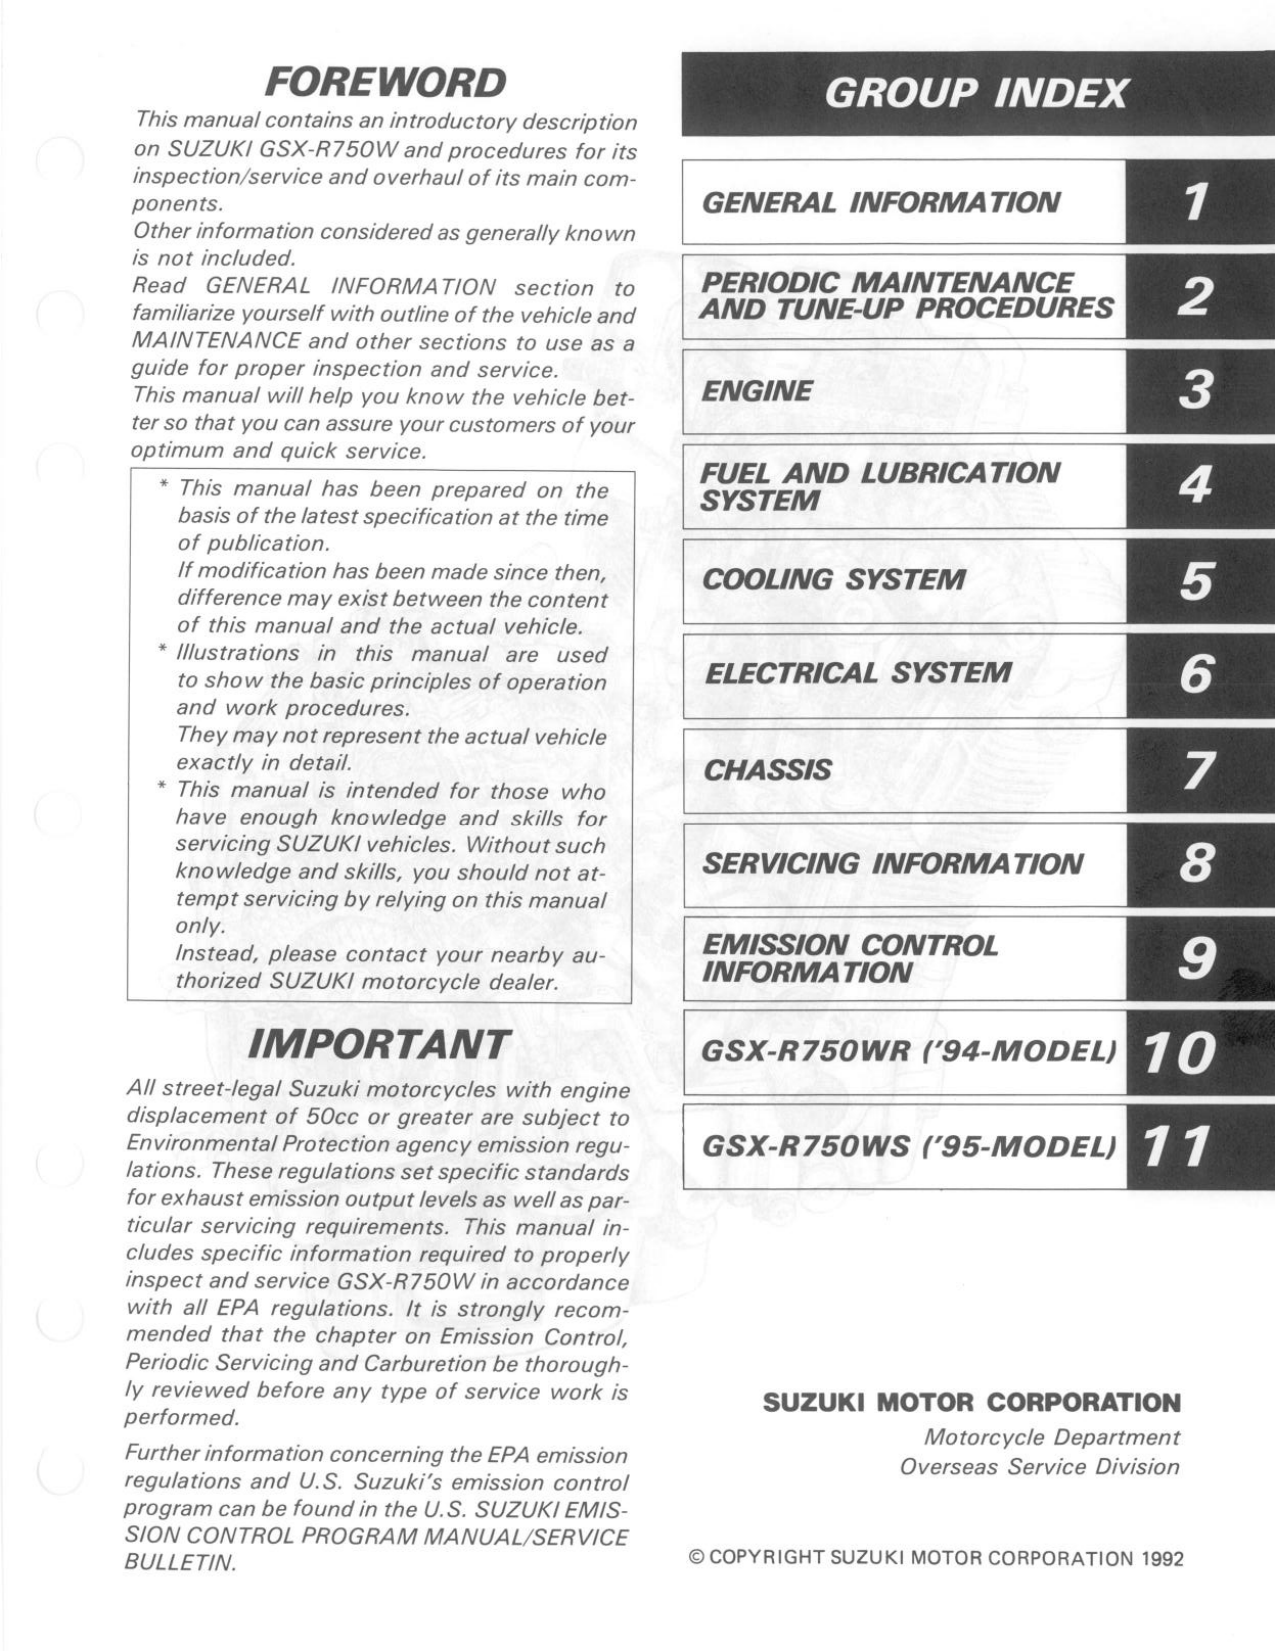 1993-1995 Suzuki™ GSX-R750 manual Preview image 3